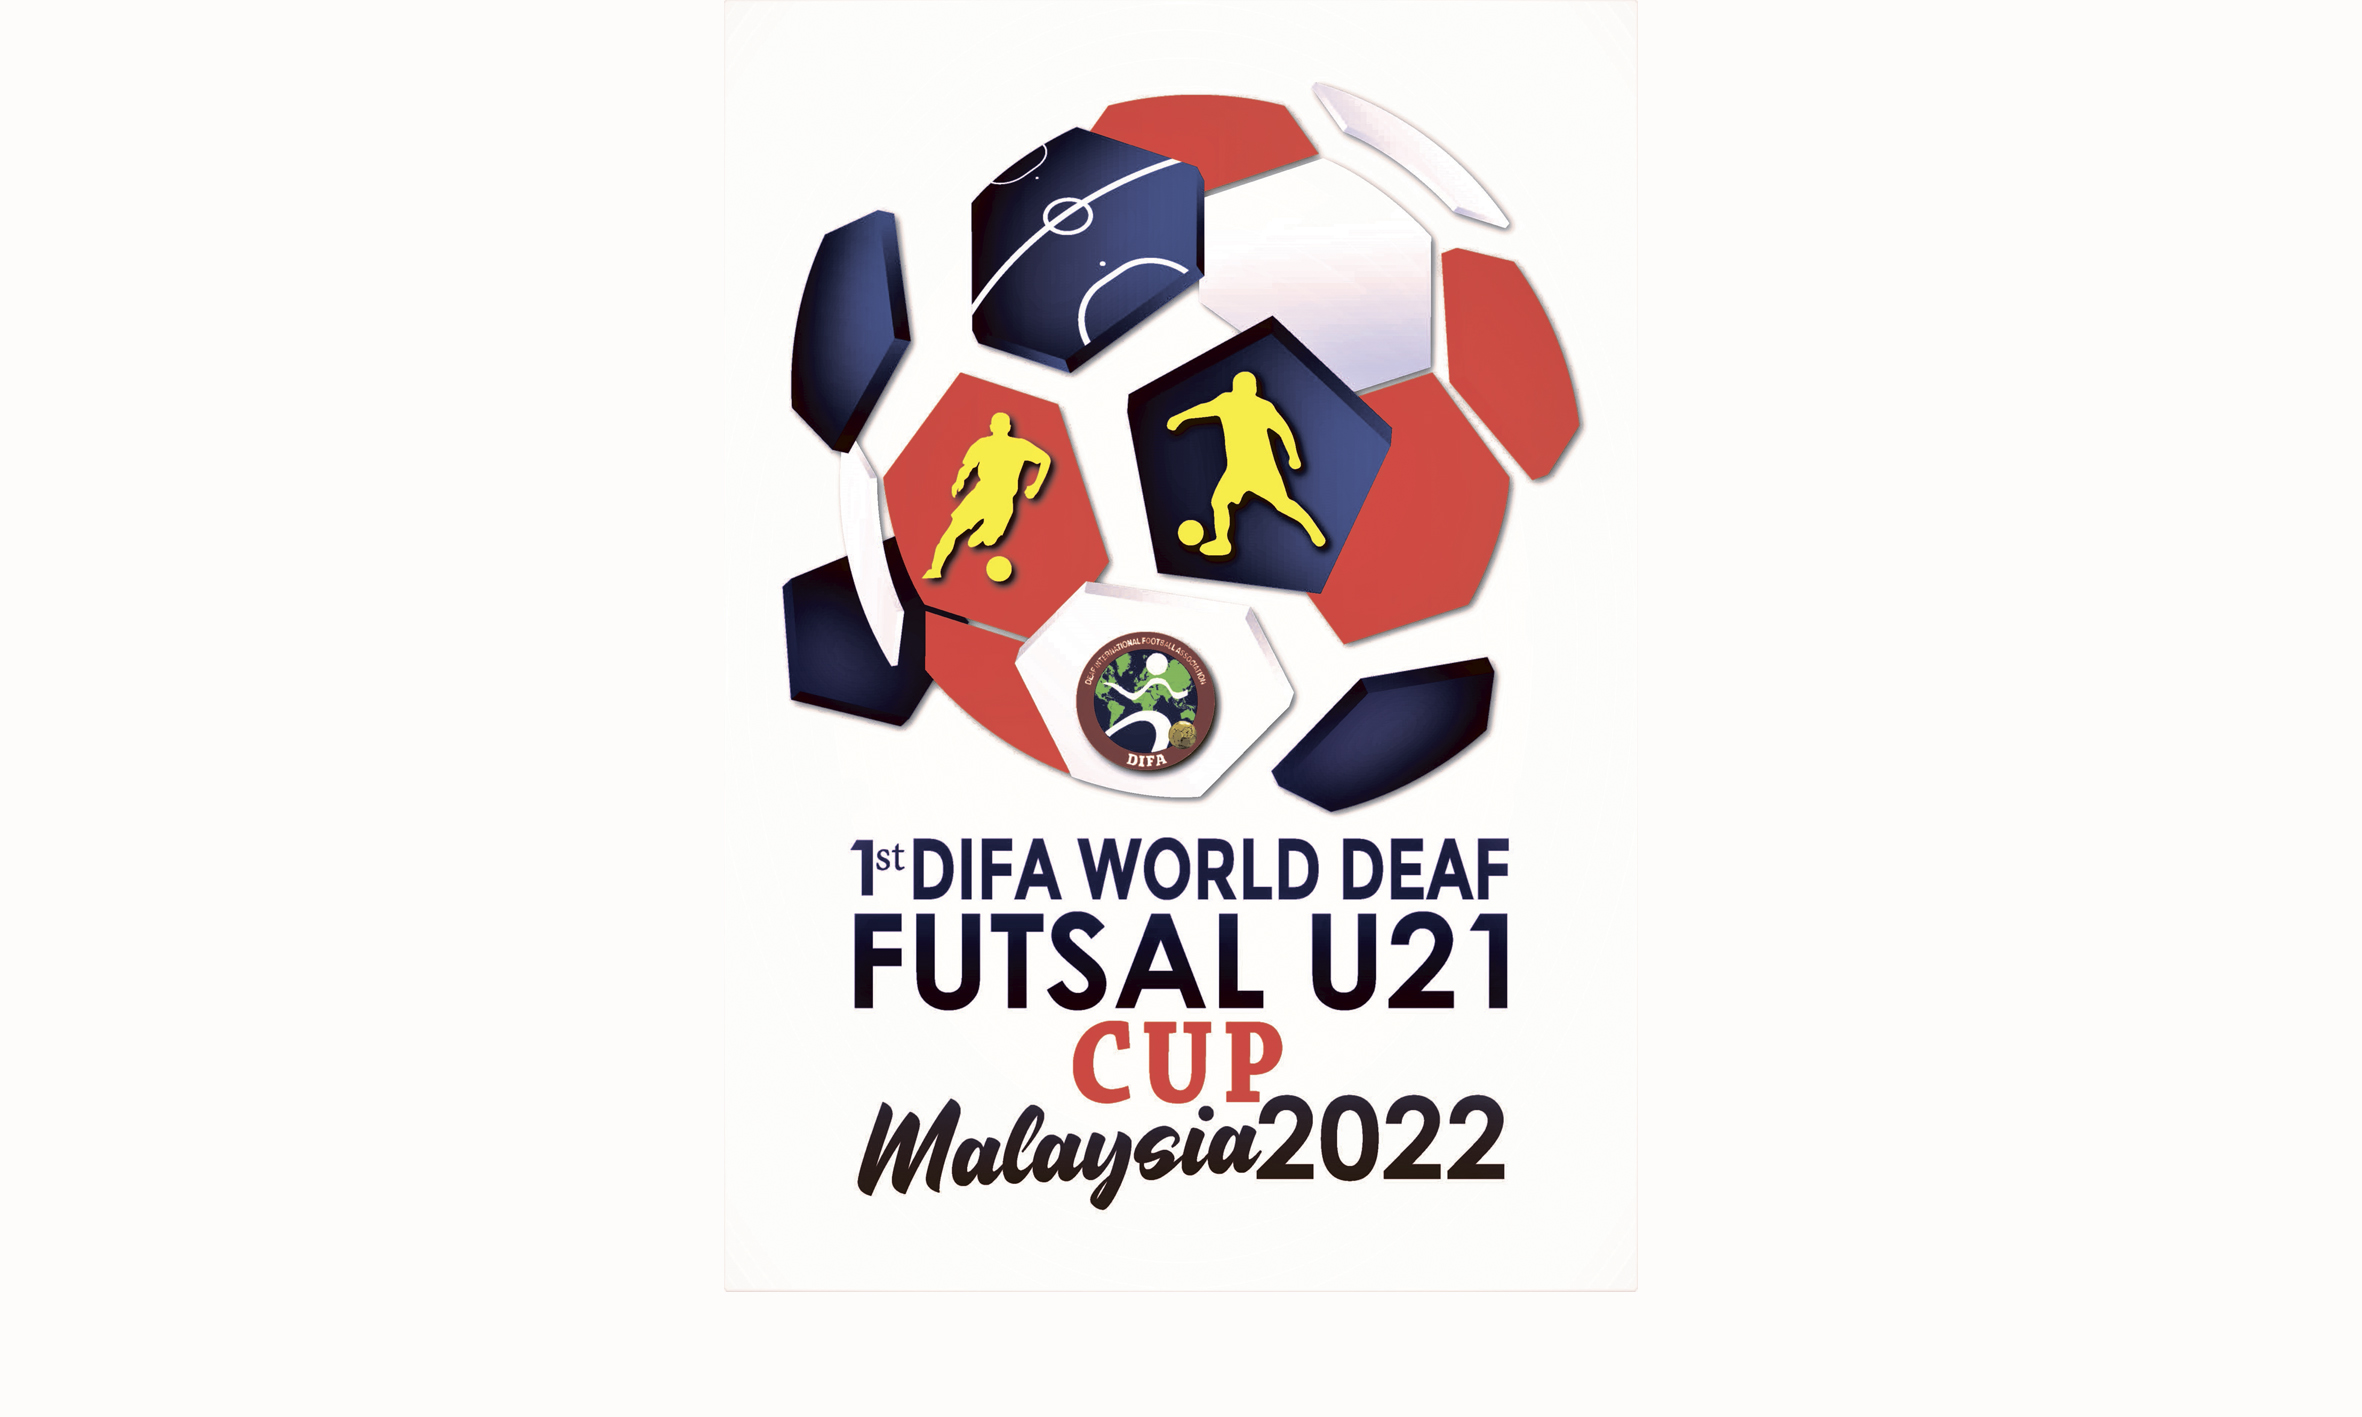 1st Futsal World Deaf Futsal U21 Championships